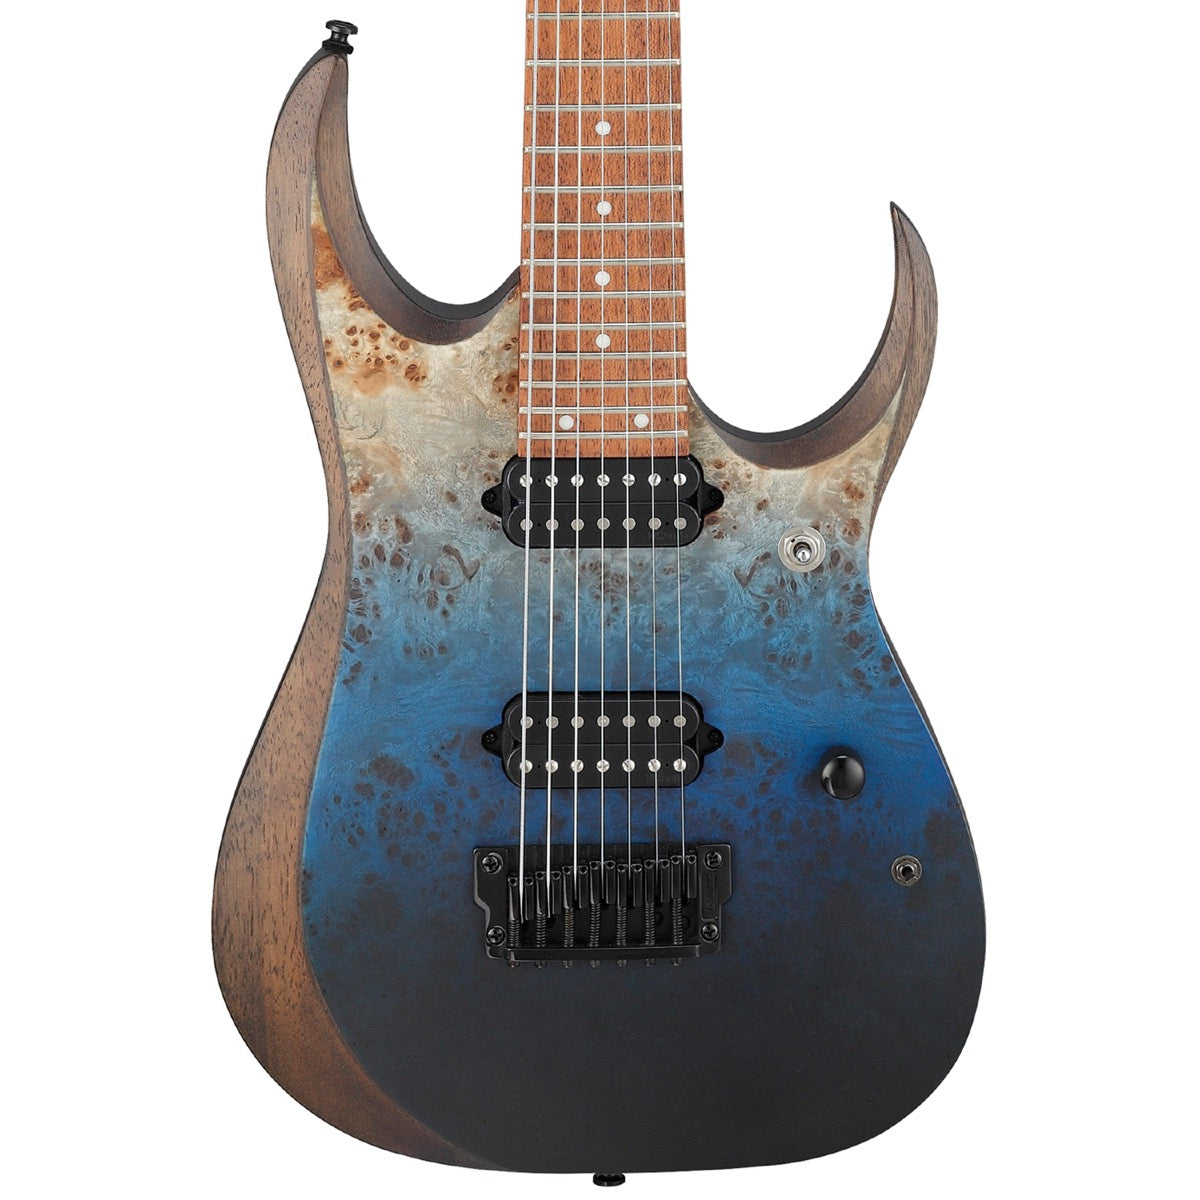 Ibanez RGD7521PBDSF Standard 7-String Electric Guitar - Deep Seafloor Fade